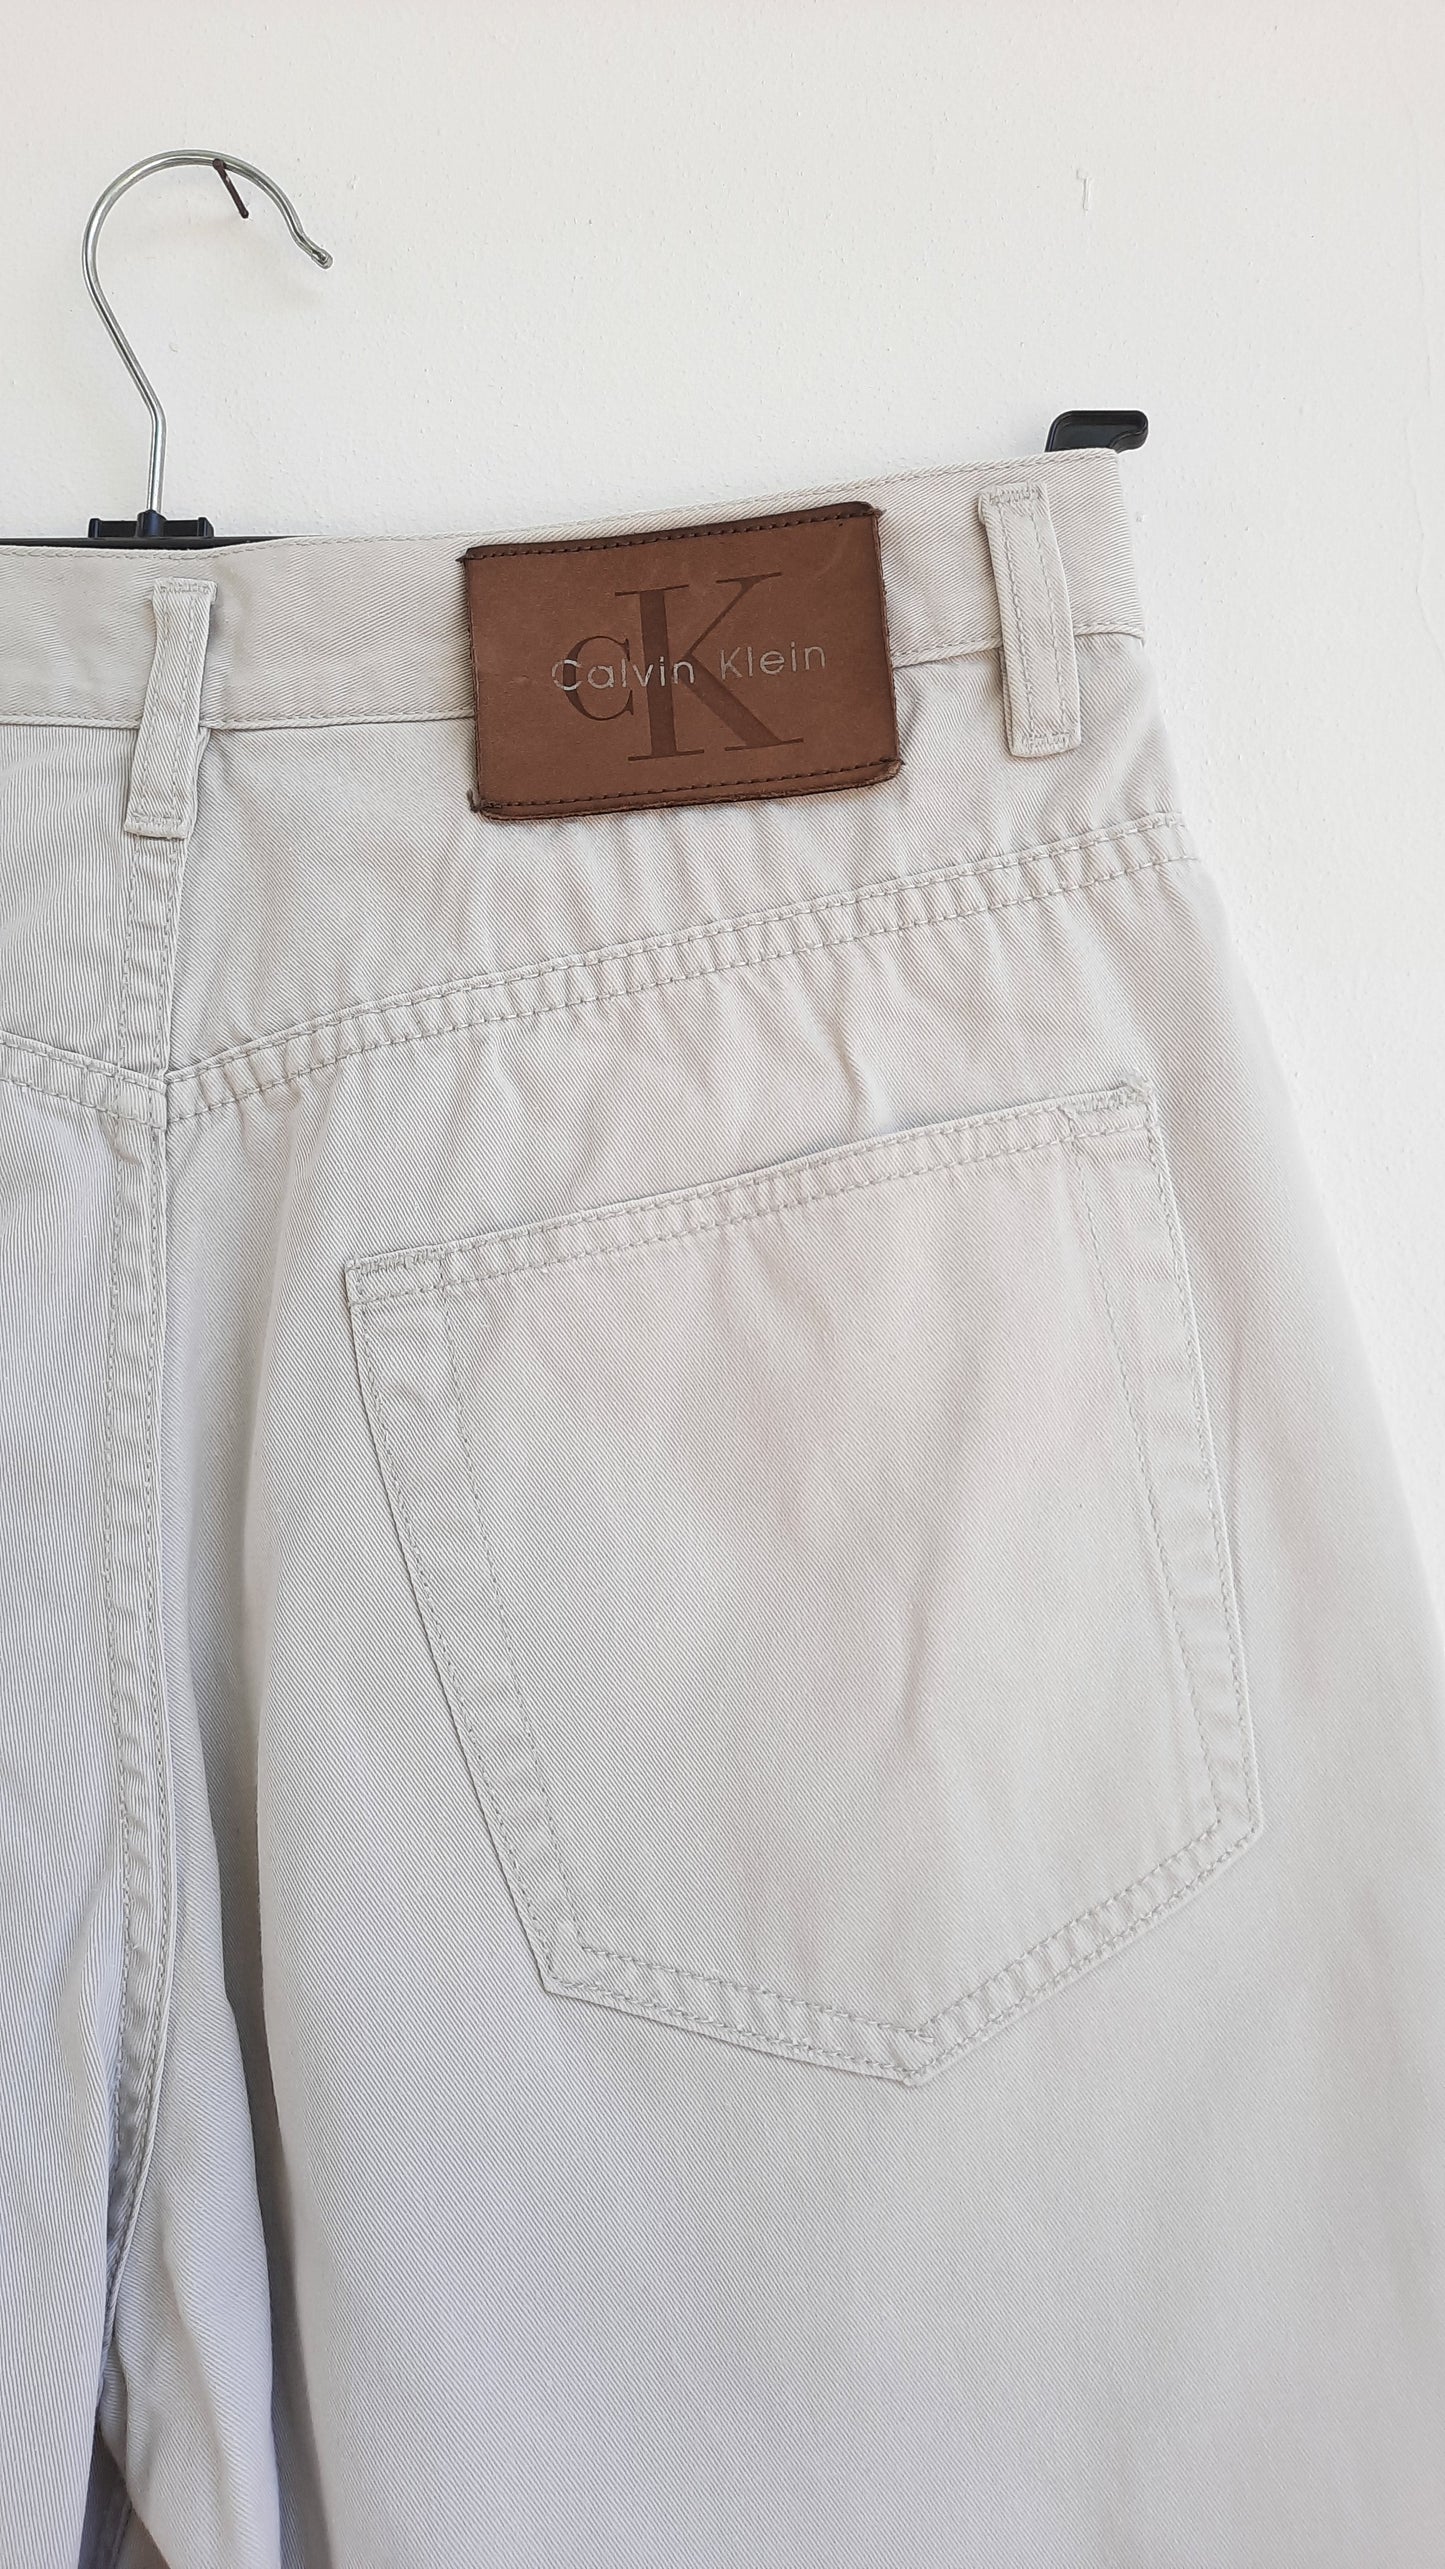 Vintage Calvin Klein Cotton Shorts